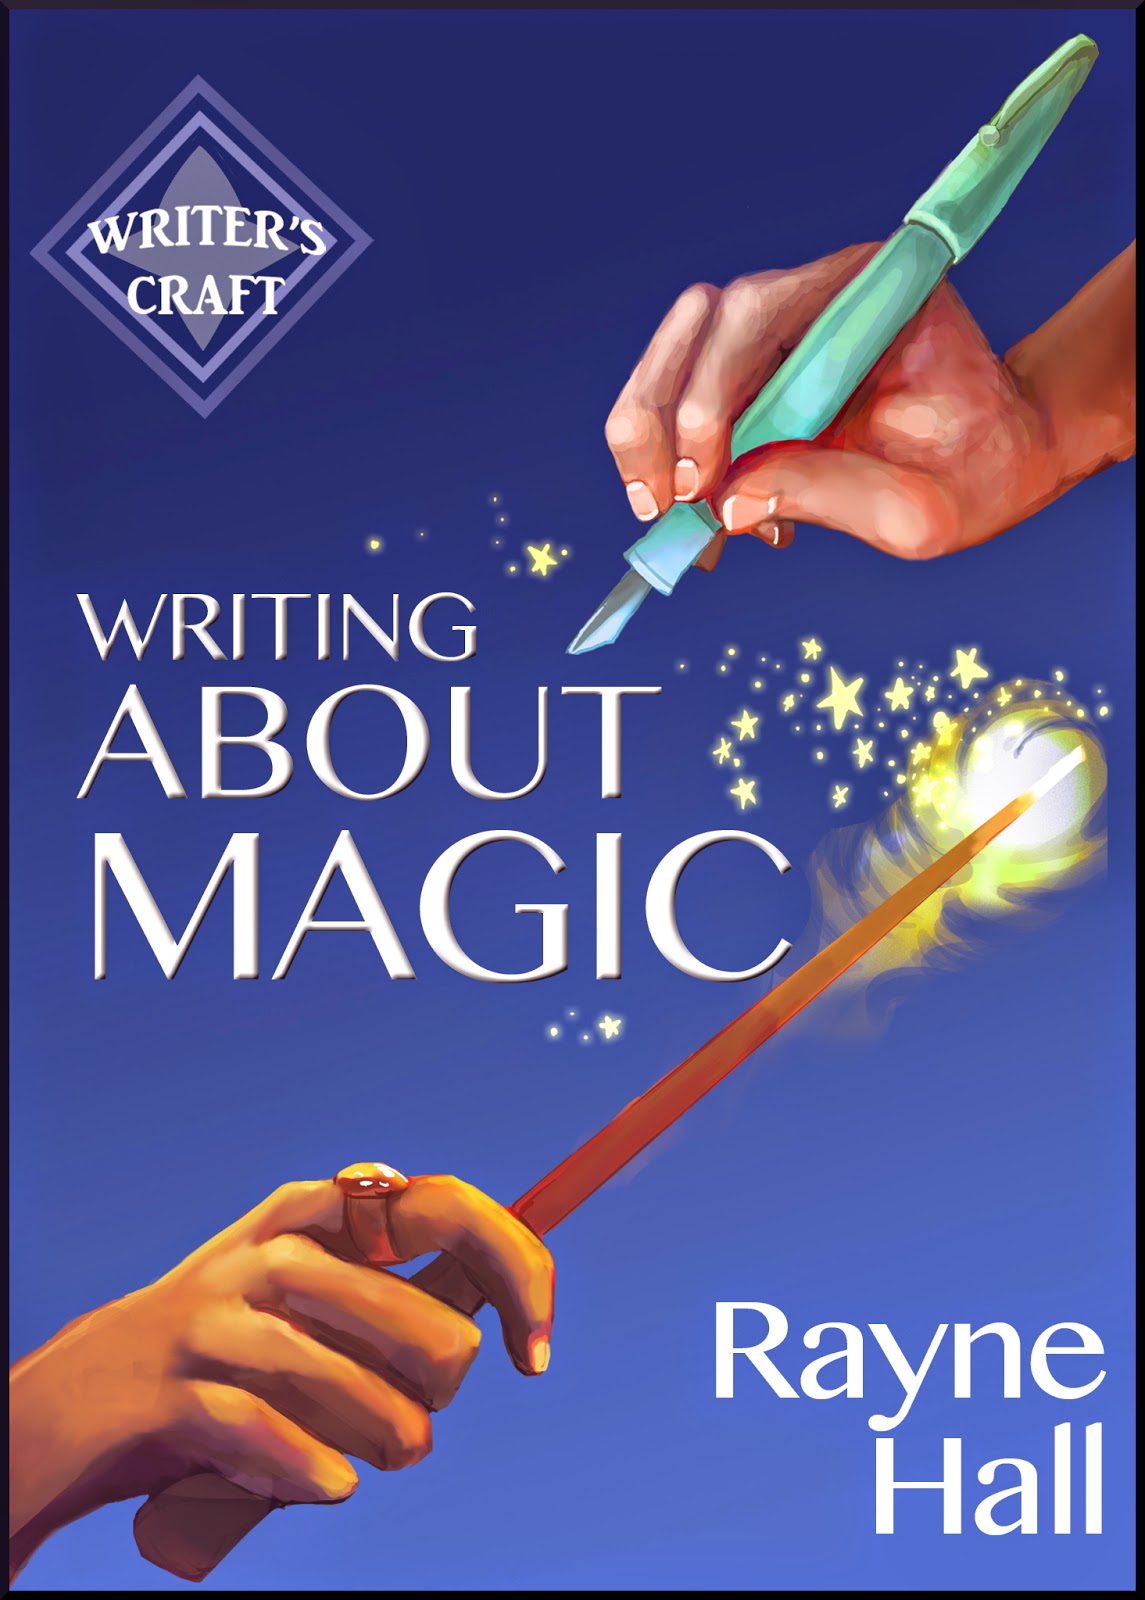 Write hall. Magic writings. Лафт крафт писатель. Story about the Magic. Writing Magic Piraun.